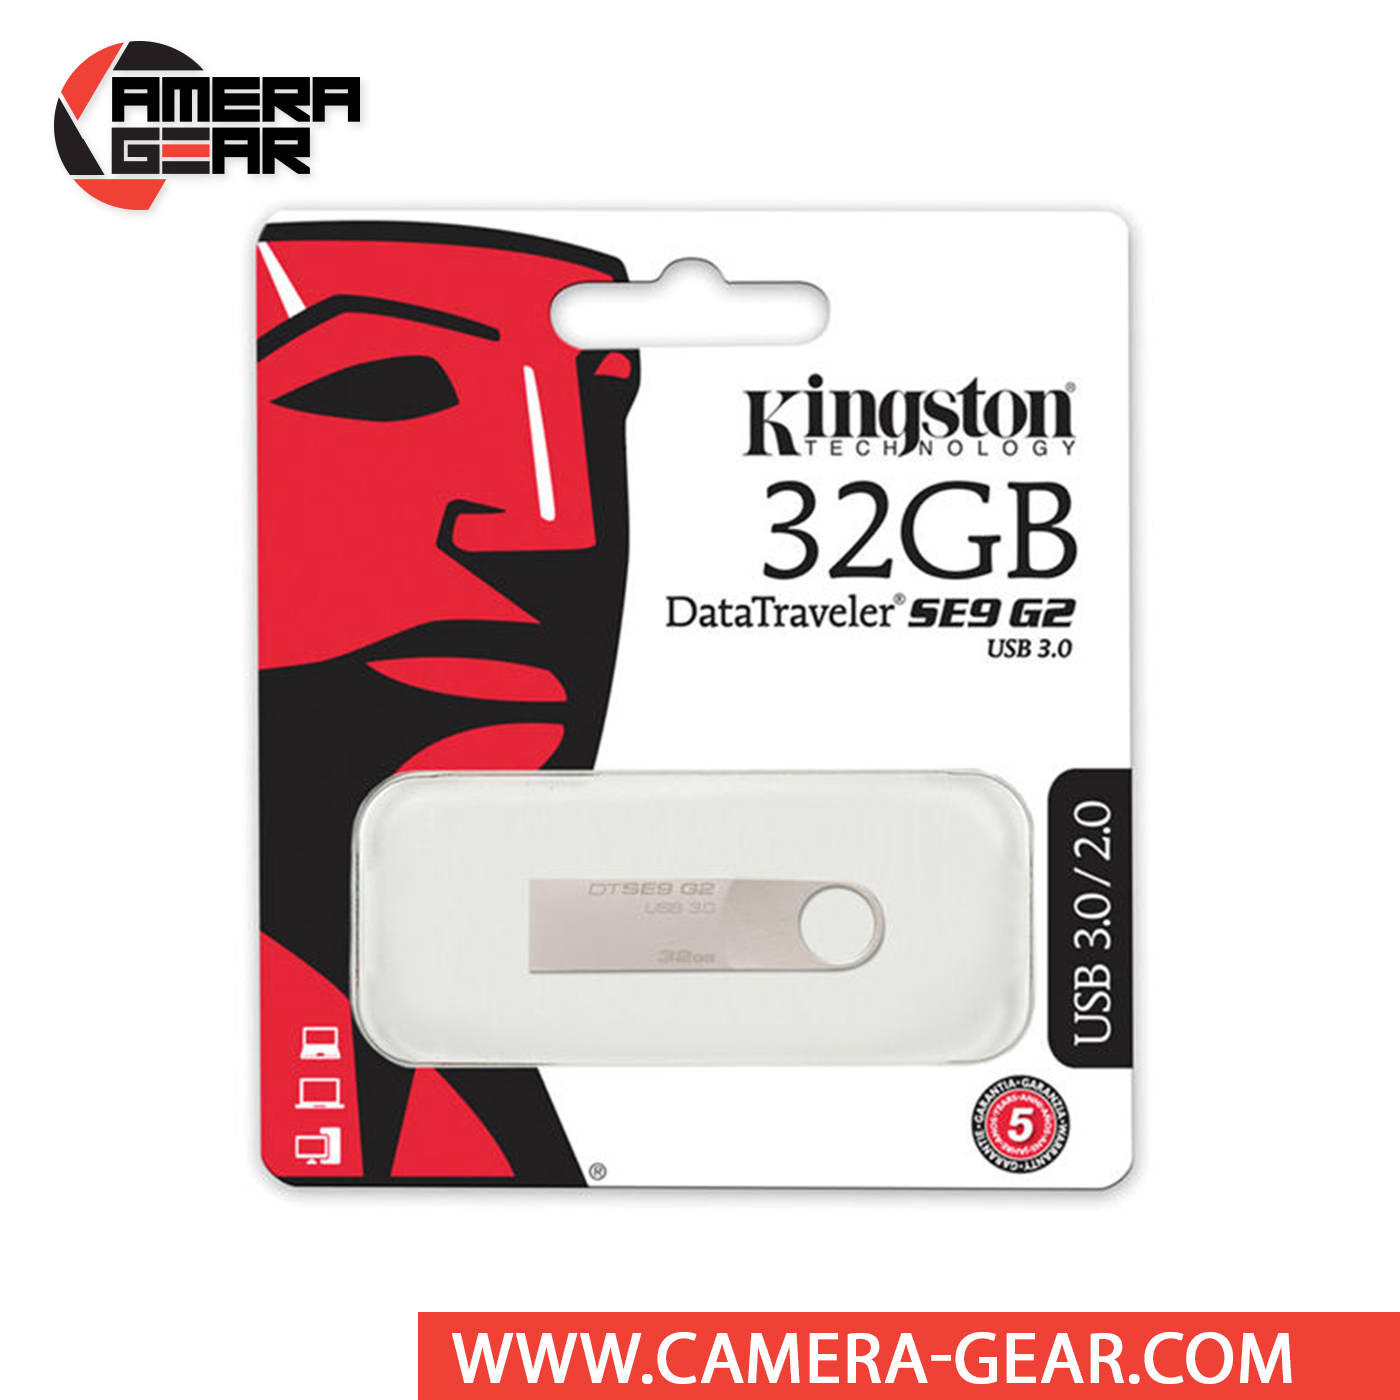 Body Watt theater Kingston 32GB DataTraveler SE9 G2 USB 3.0 Flash Drive - Camera Gear